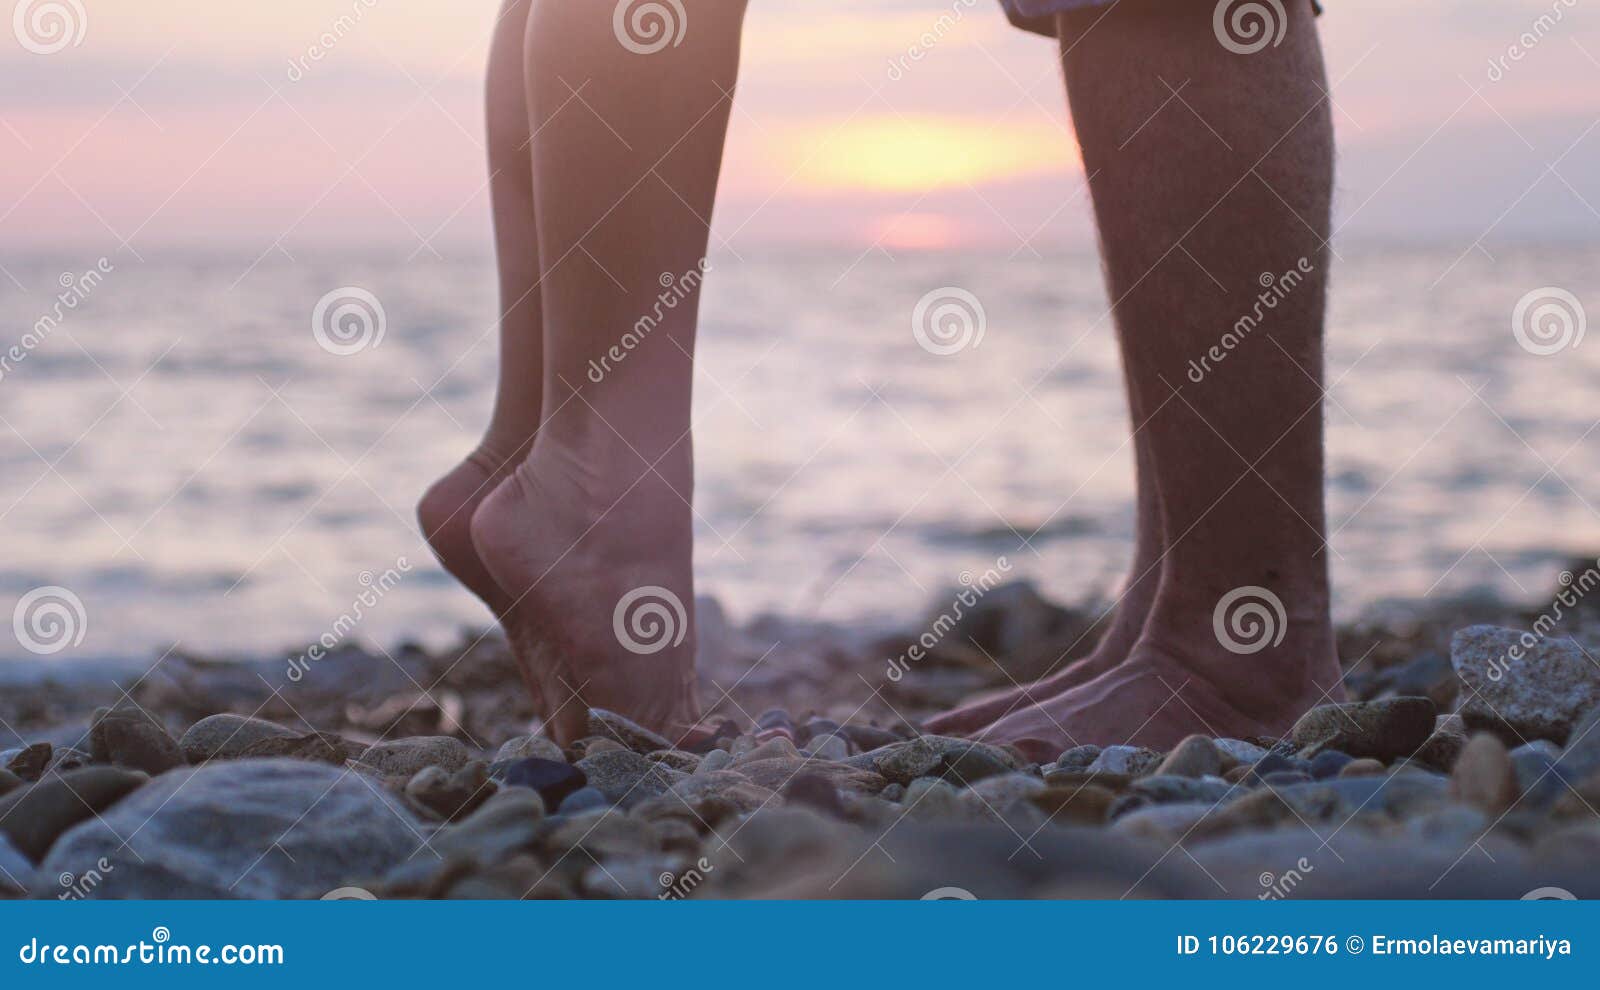 363 Beach Kiss Legs Stock Photos - Free & Royalty-Free Stock